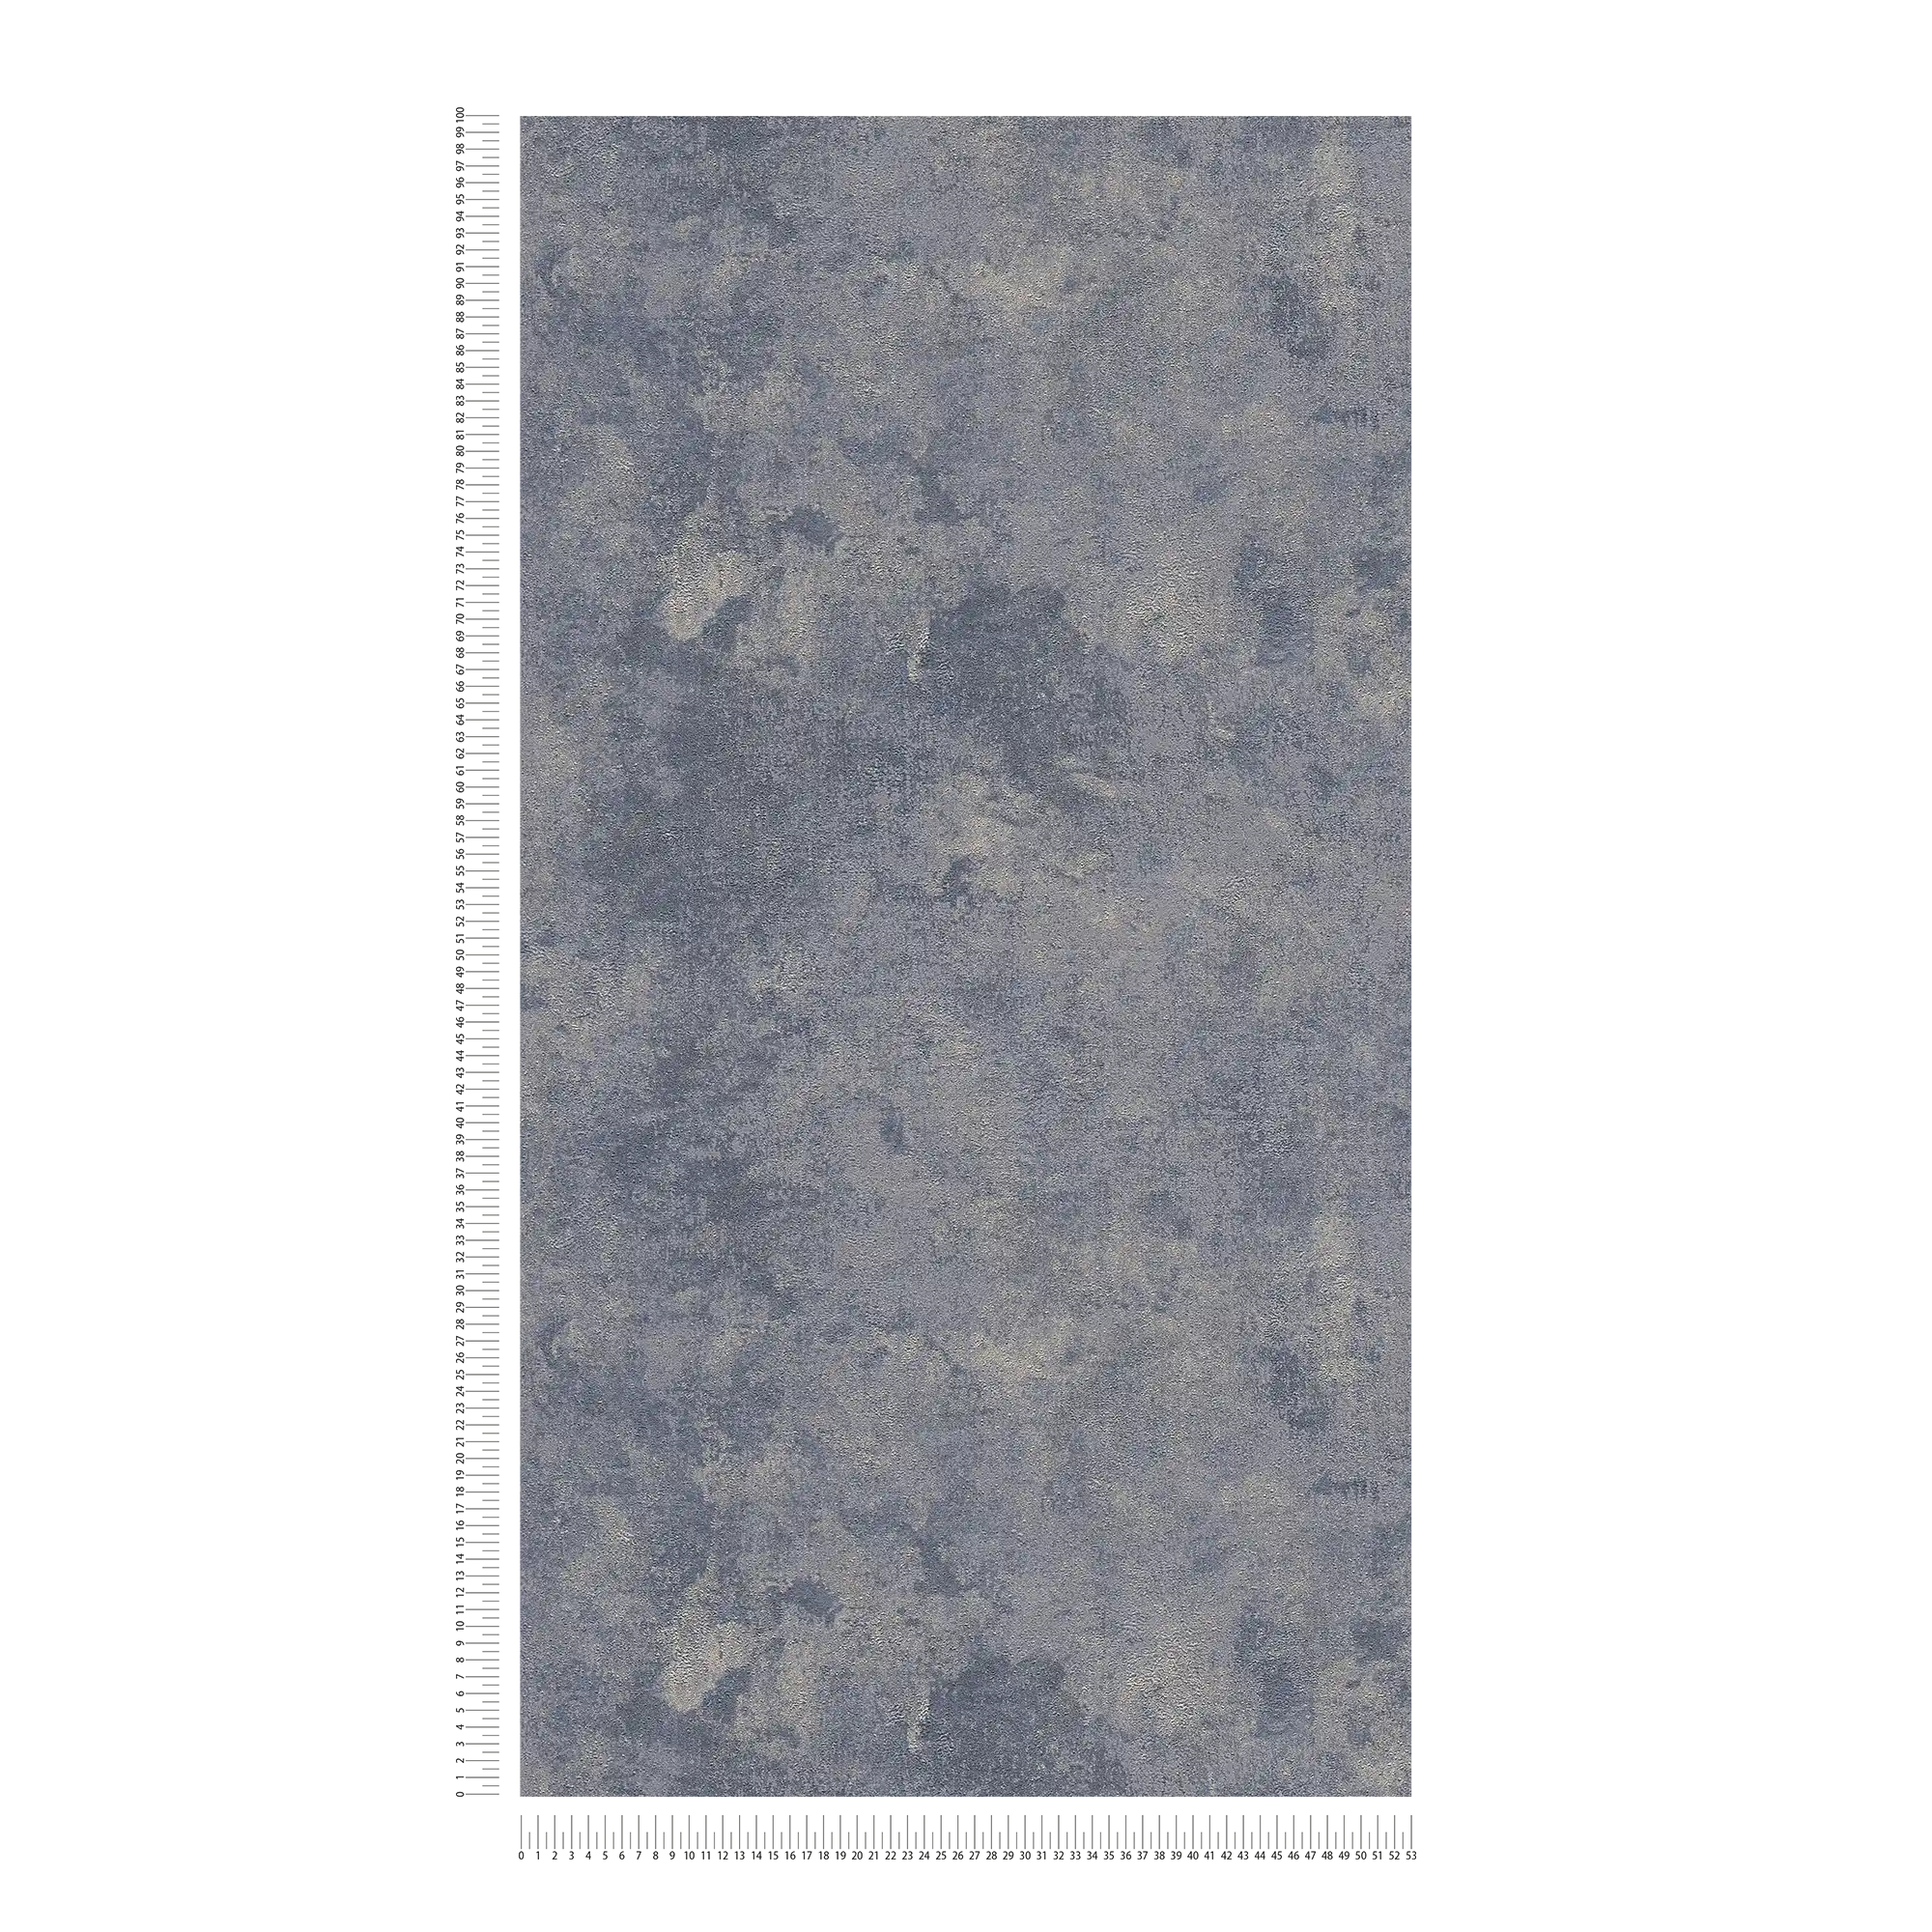             wallpaper rough structure & gloss effect - blue, silver, grey
        